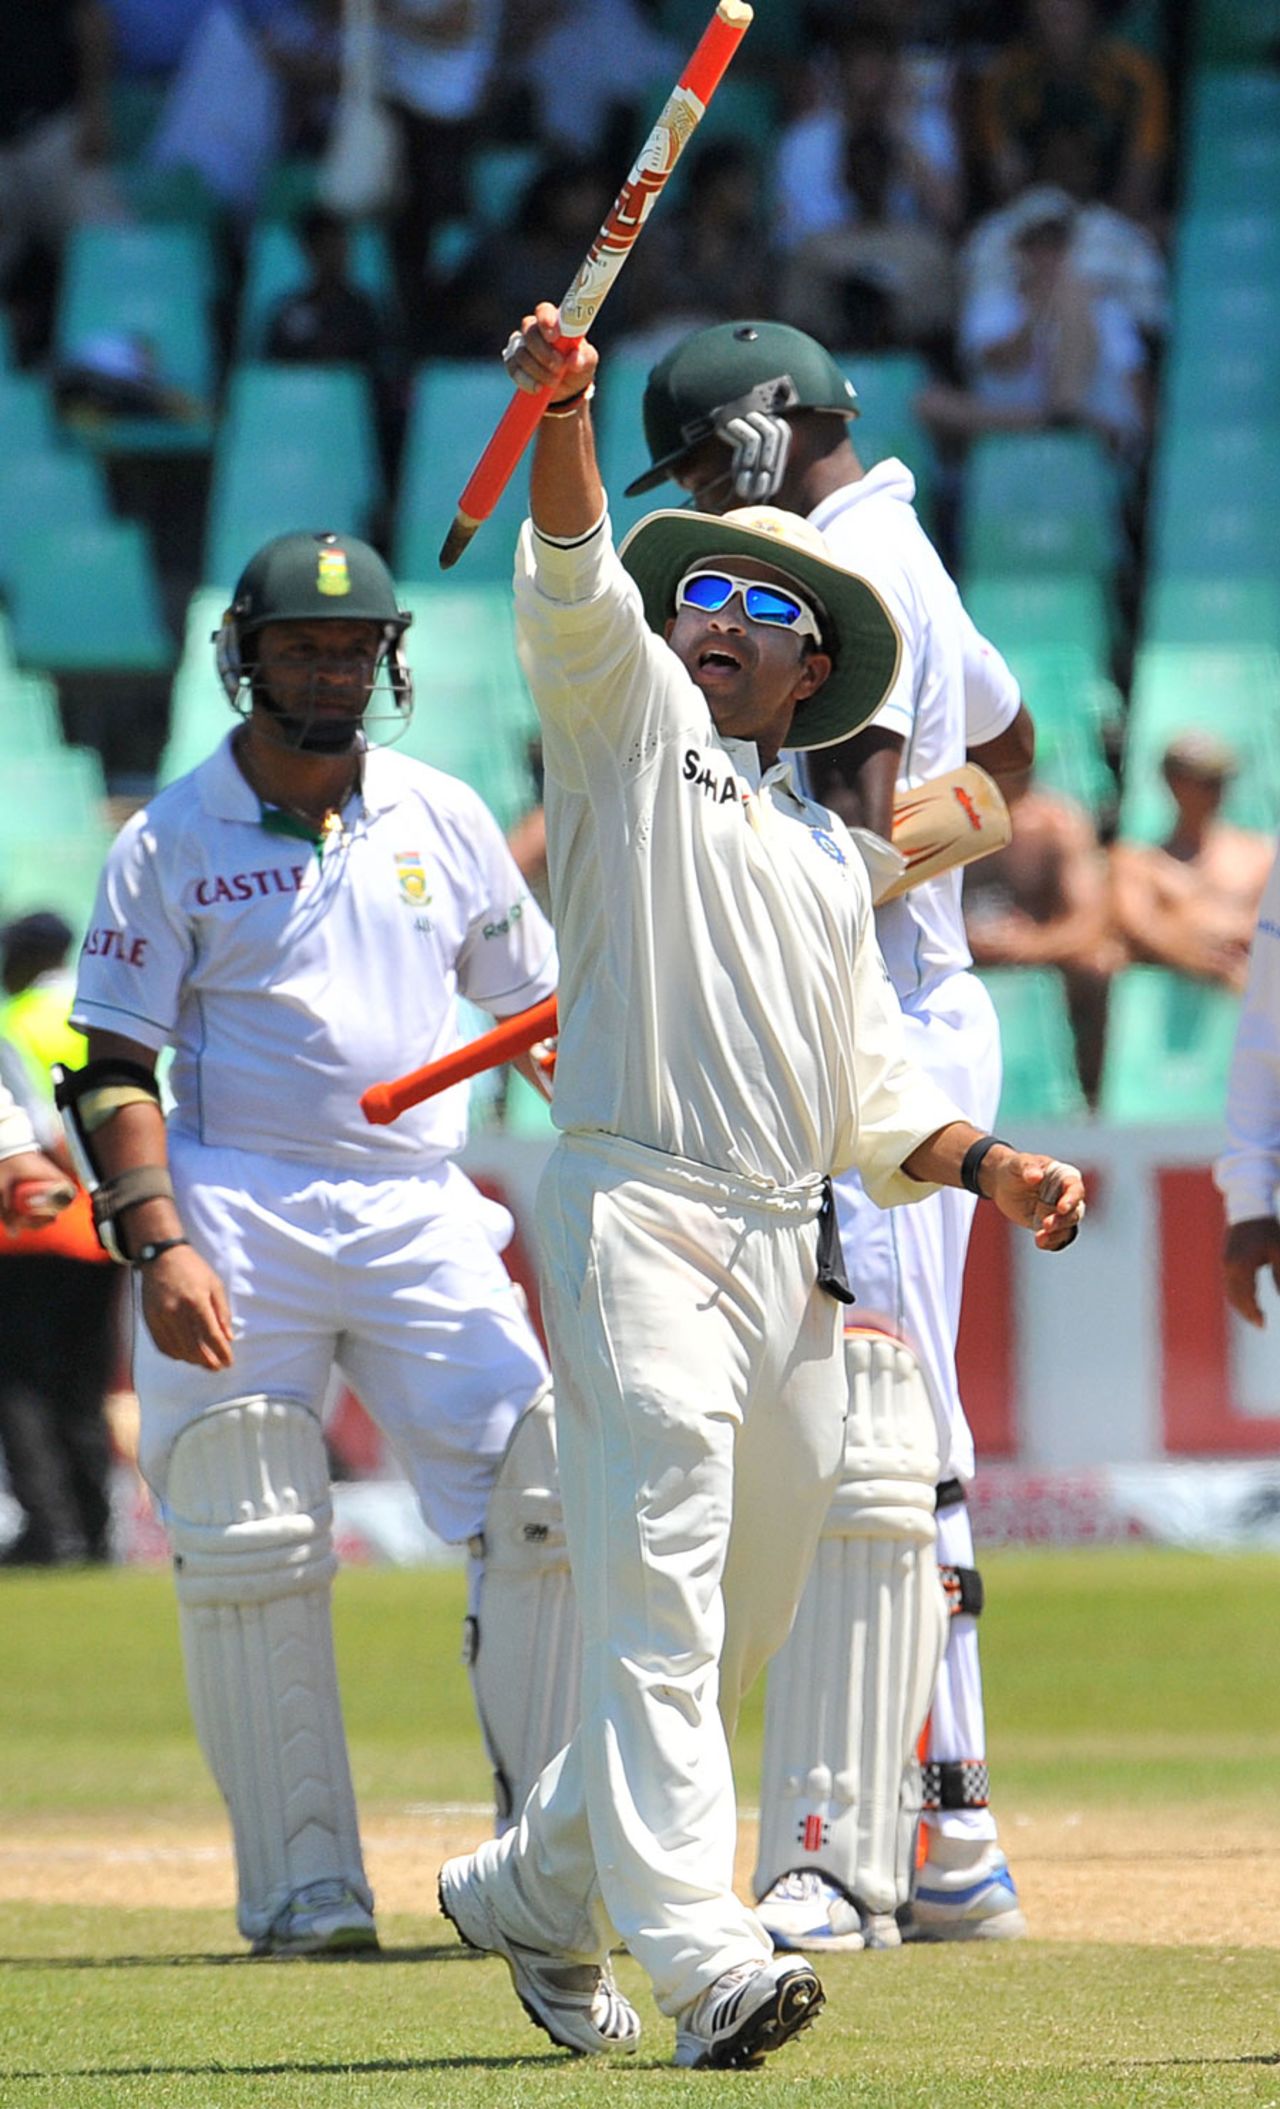 Sachin Tendulkar claims a stump as a souvenir after India's win, South Africa v India, 2nd Test, Durban, 4th day, December 29, 2010